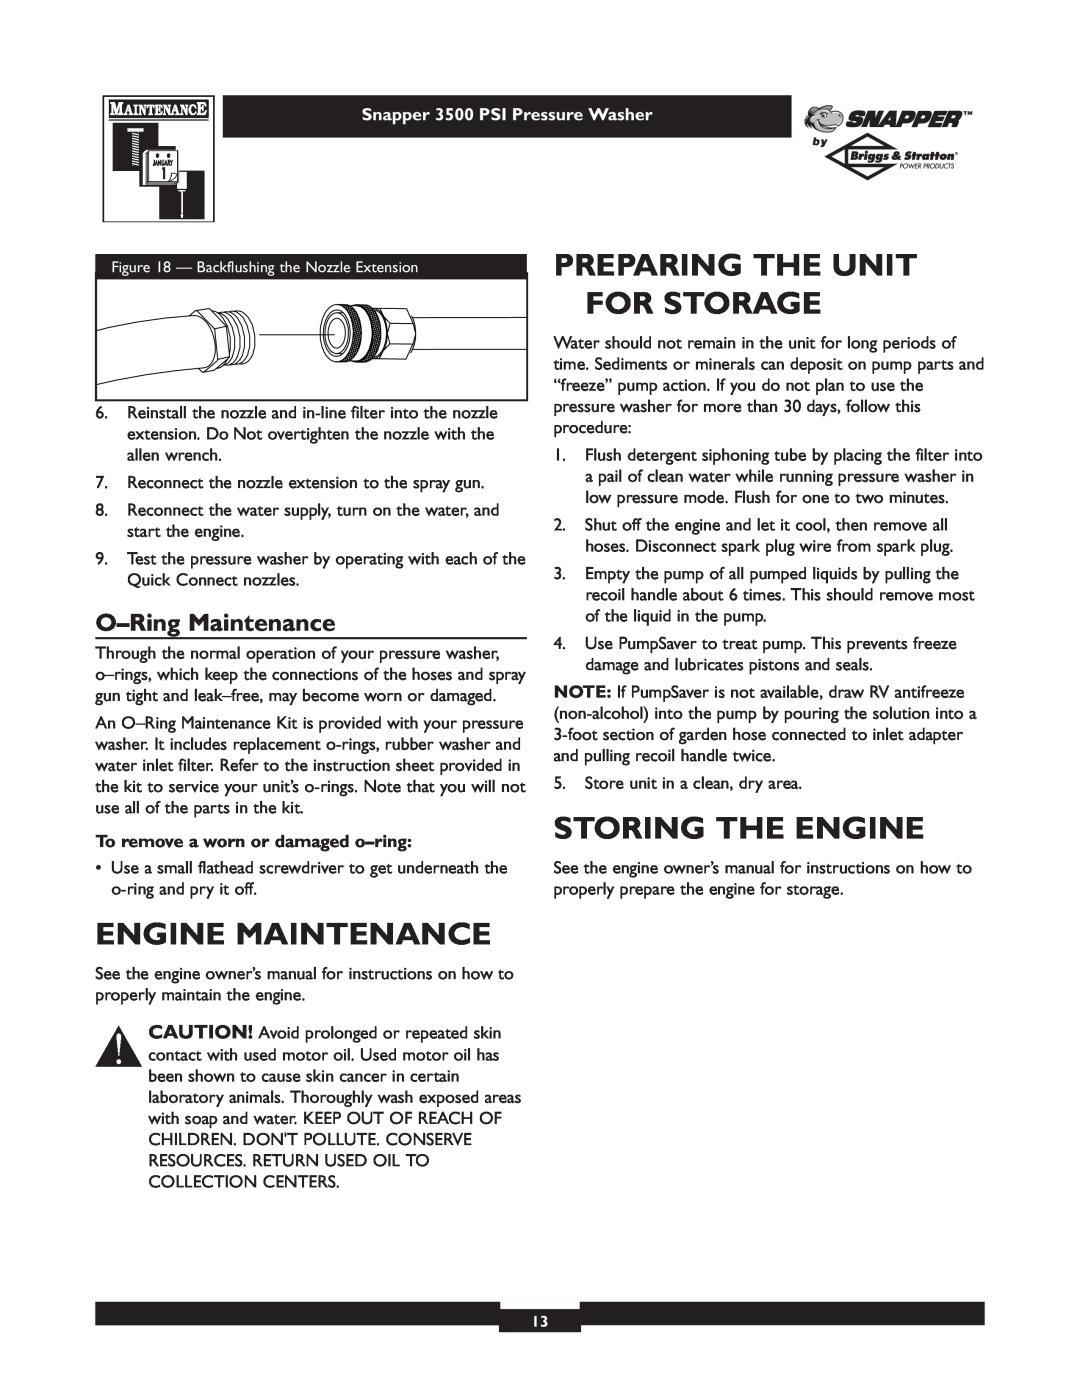 Briggs & Stratton 3500PSI manual Preparing The Unit For Storage, Storing The Engine, Engine Maintenance, O-Ring Maintenance 